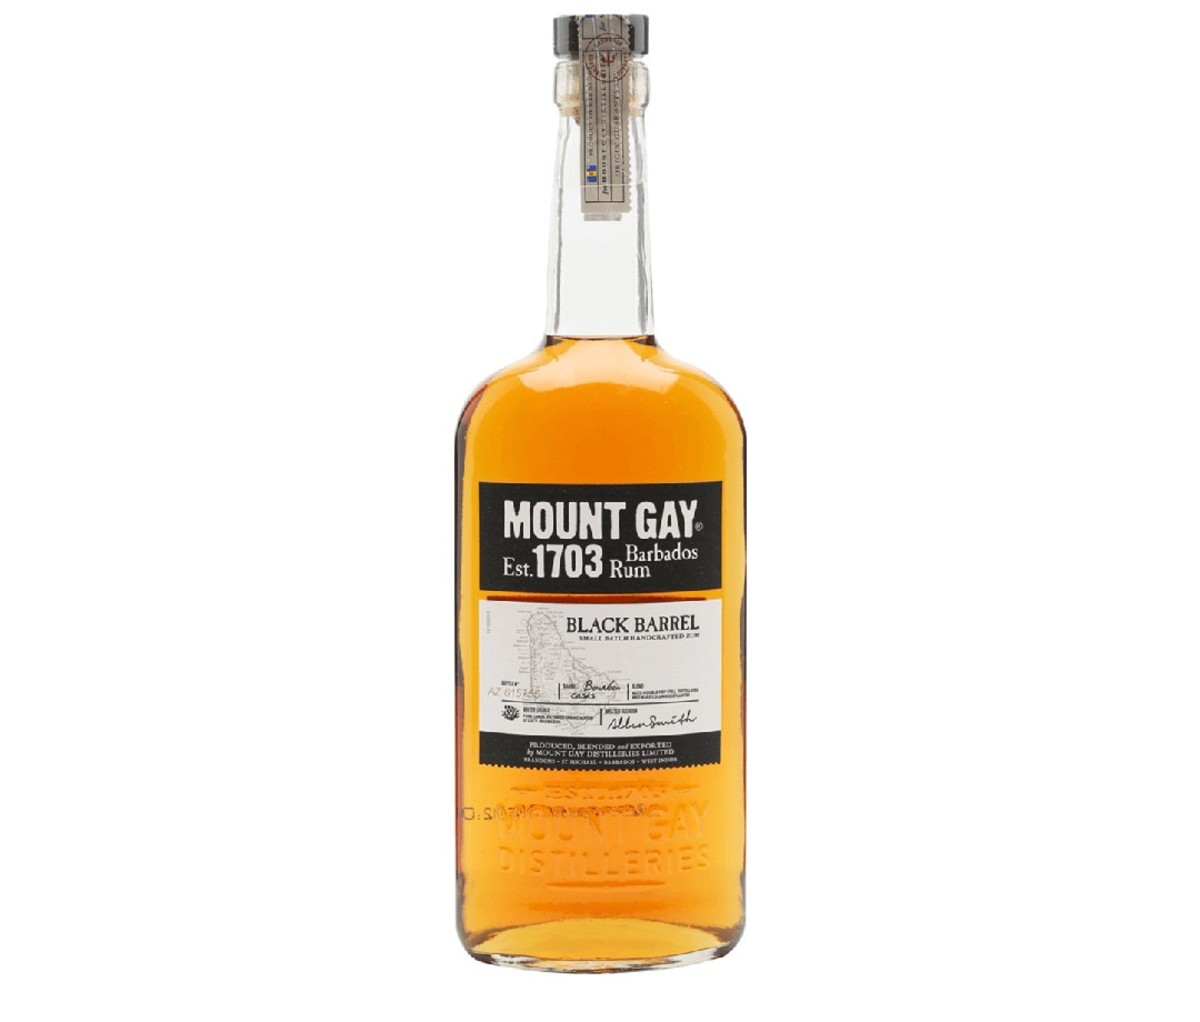 Bottle of Mount Gay Black Barrel dark rum